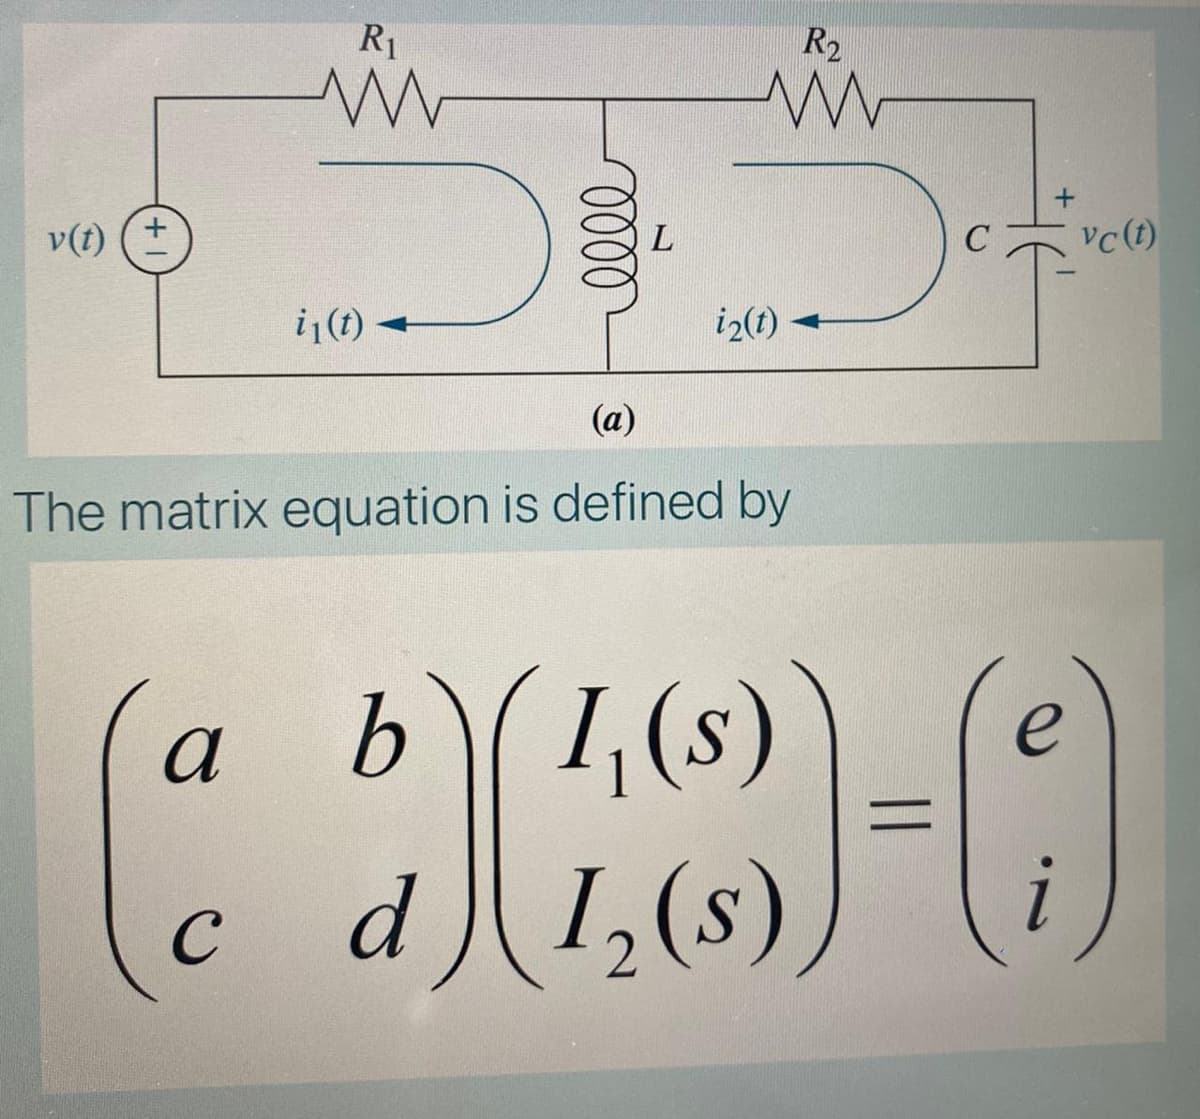 R1
R2
v(t) (+
vc(t)
i(1)
iz(t)
(a)
The matrix equation is defined by
b1,(s)
e
a
d
1,(s)
C
